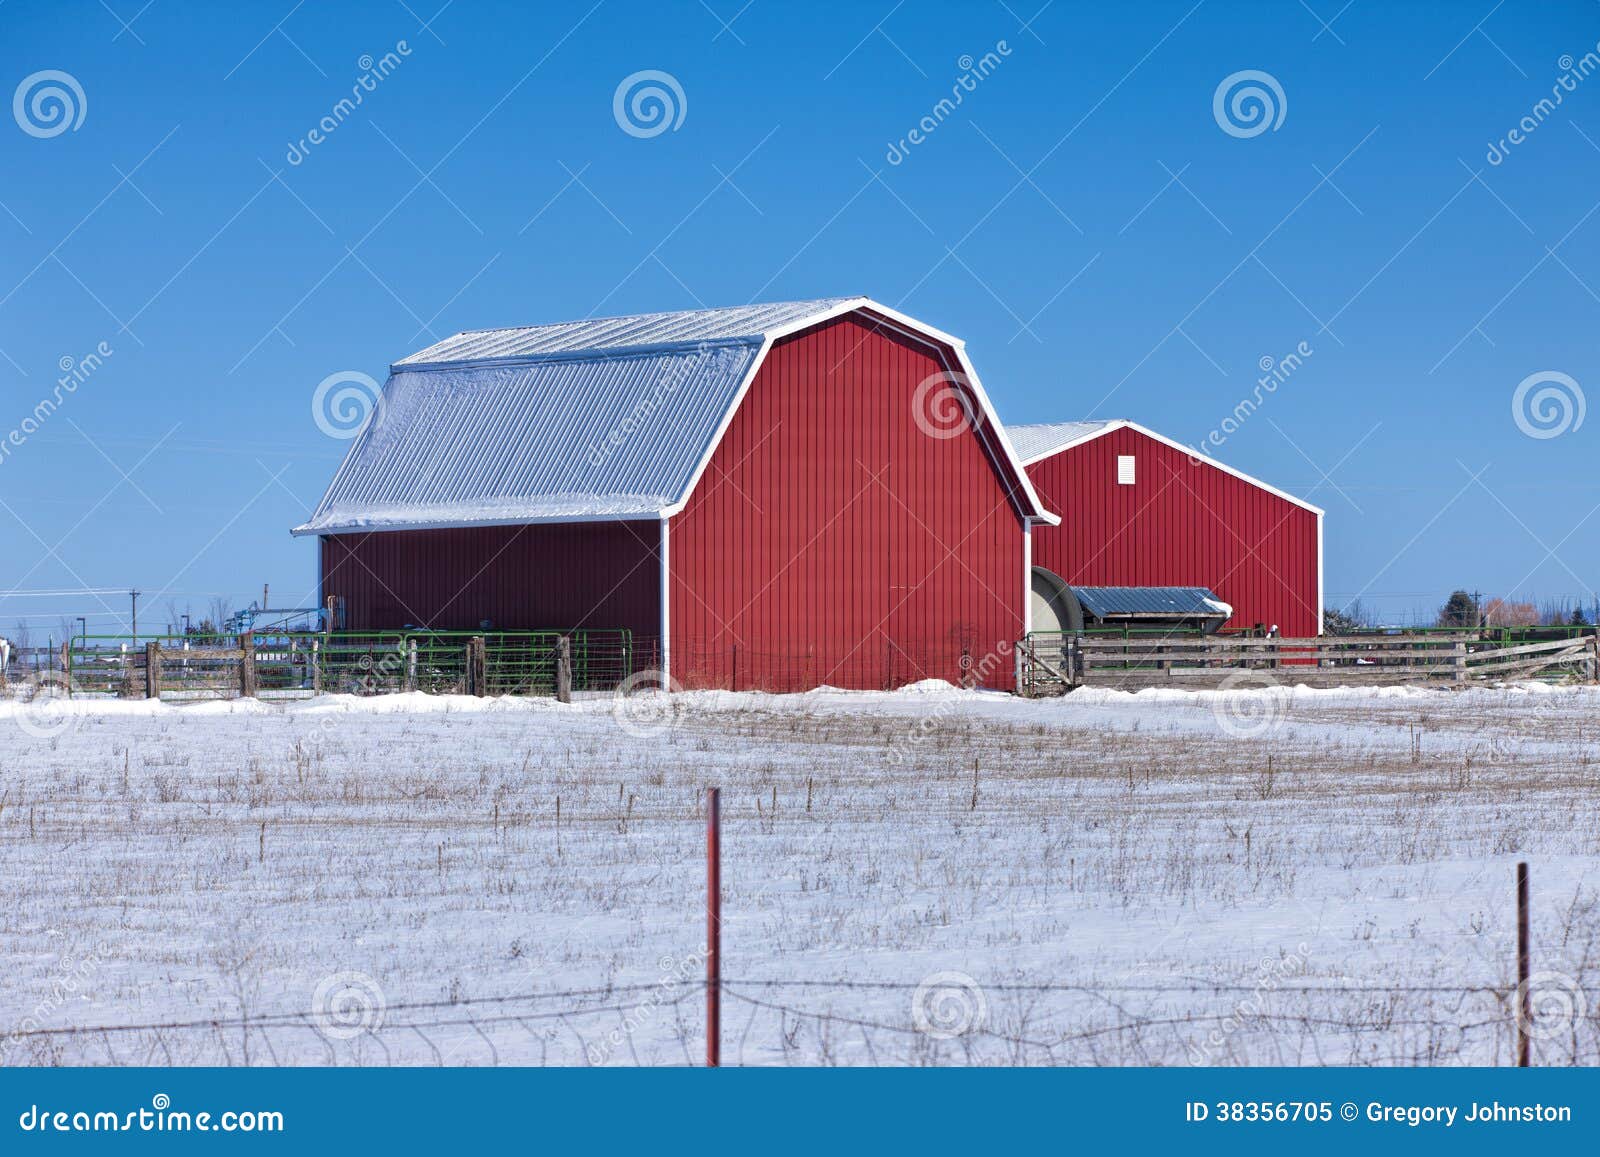 red barn on snowy prairie.